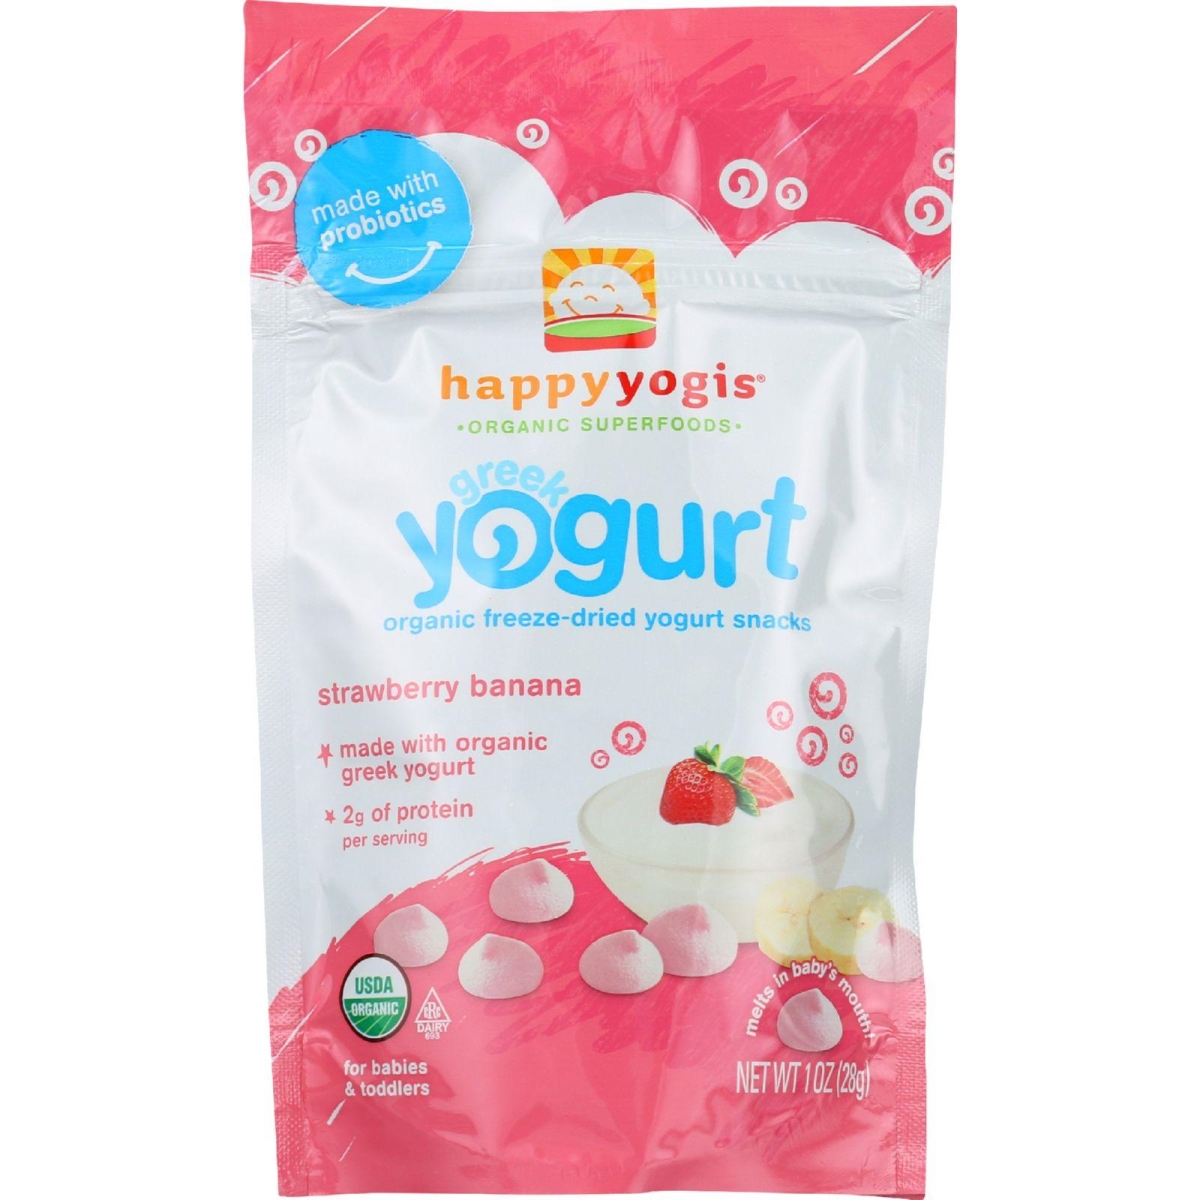 1 Oz Strawberry Banana Yogurt Snacks - Organic Freeze-dried Greek For Babies & Toddlers, Case Of 8